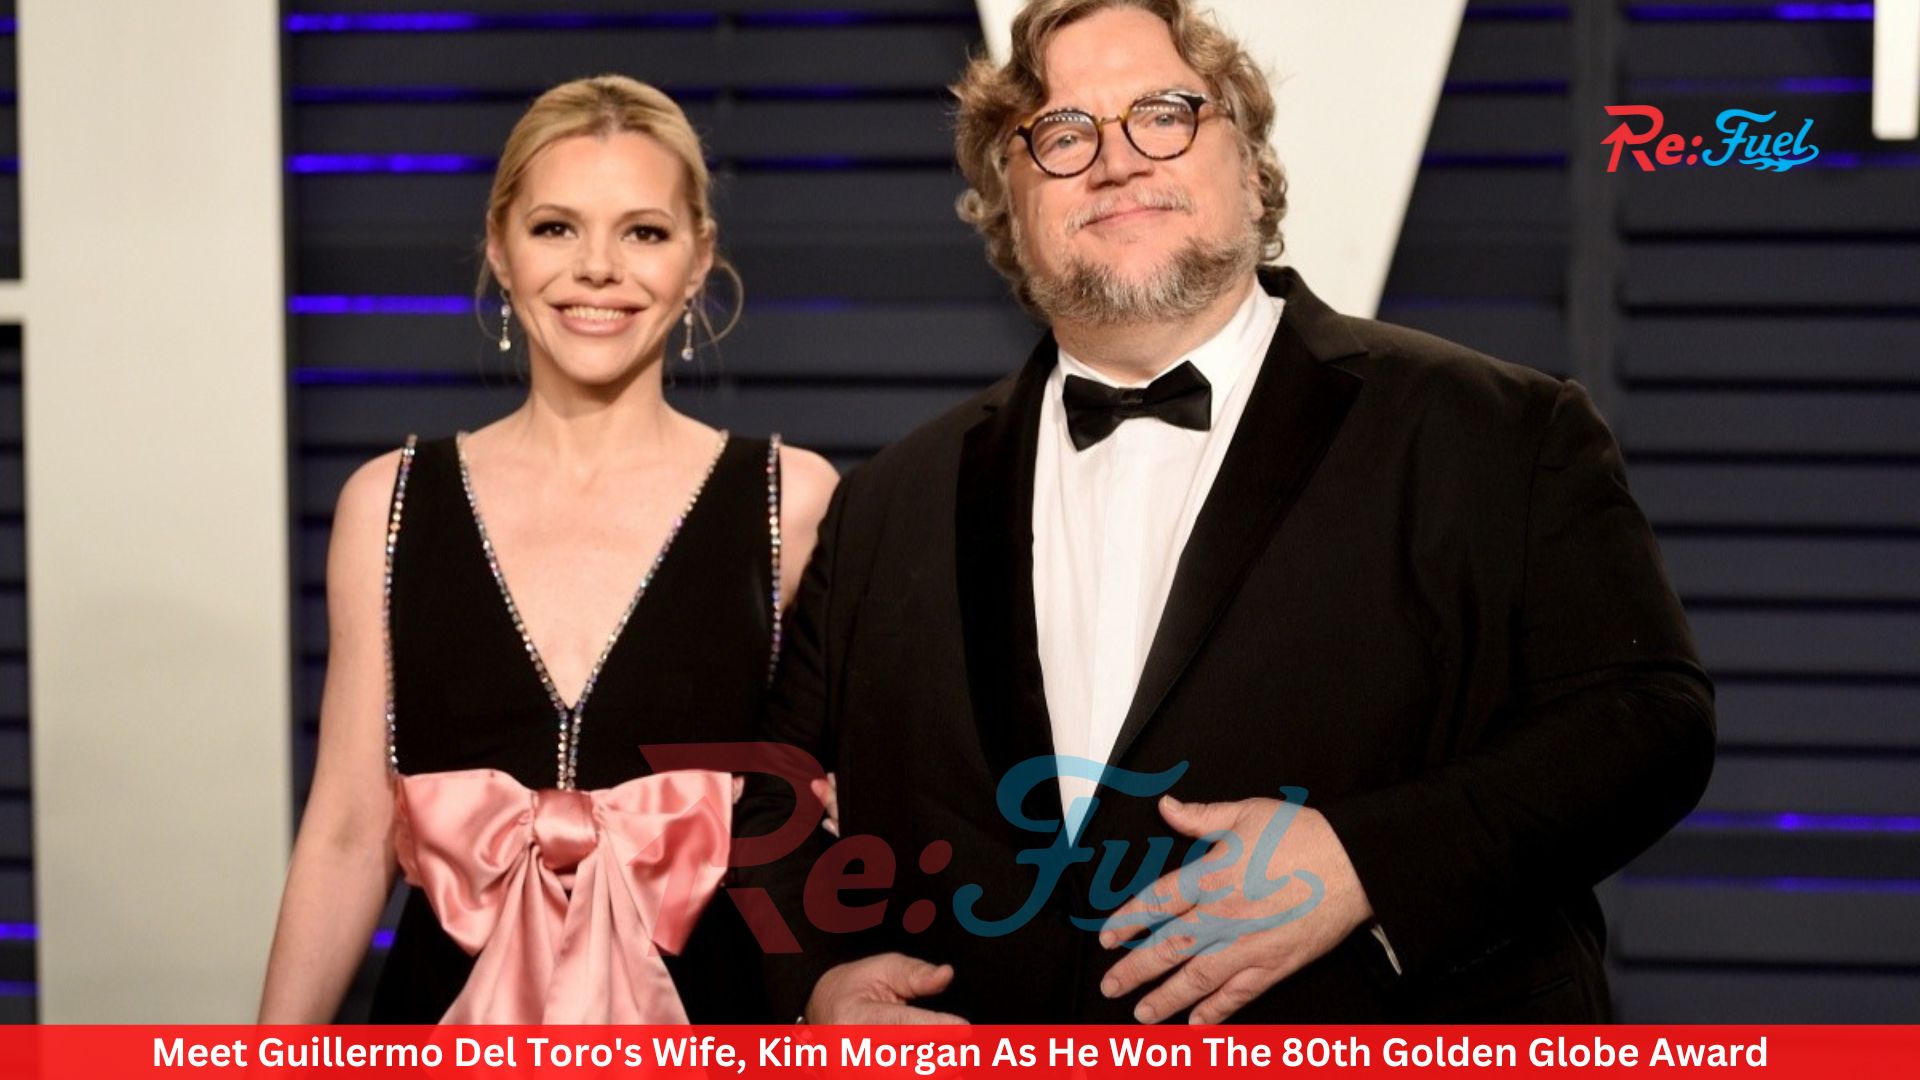 Meet Guillermo Del Toro's Wife, Kim Morgan As He Won The 80th Golden Globe Award